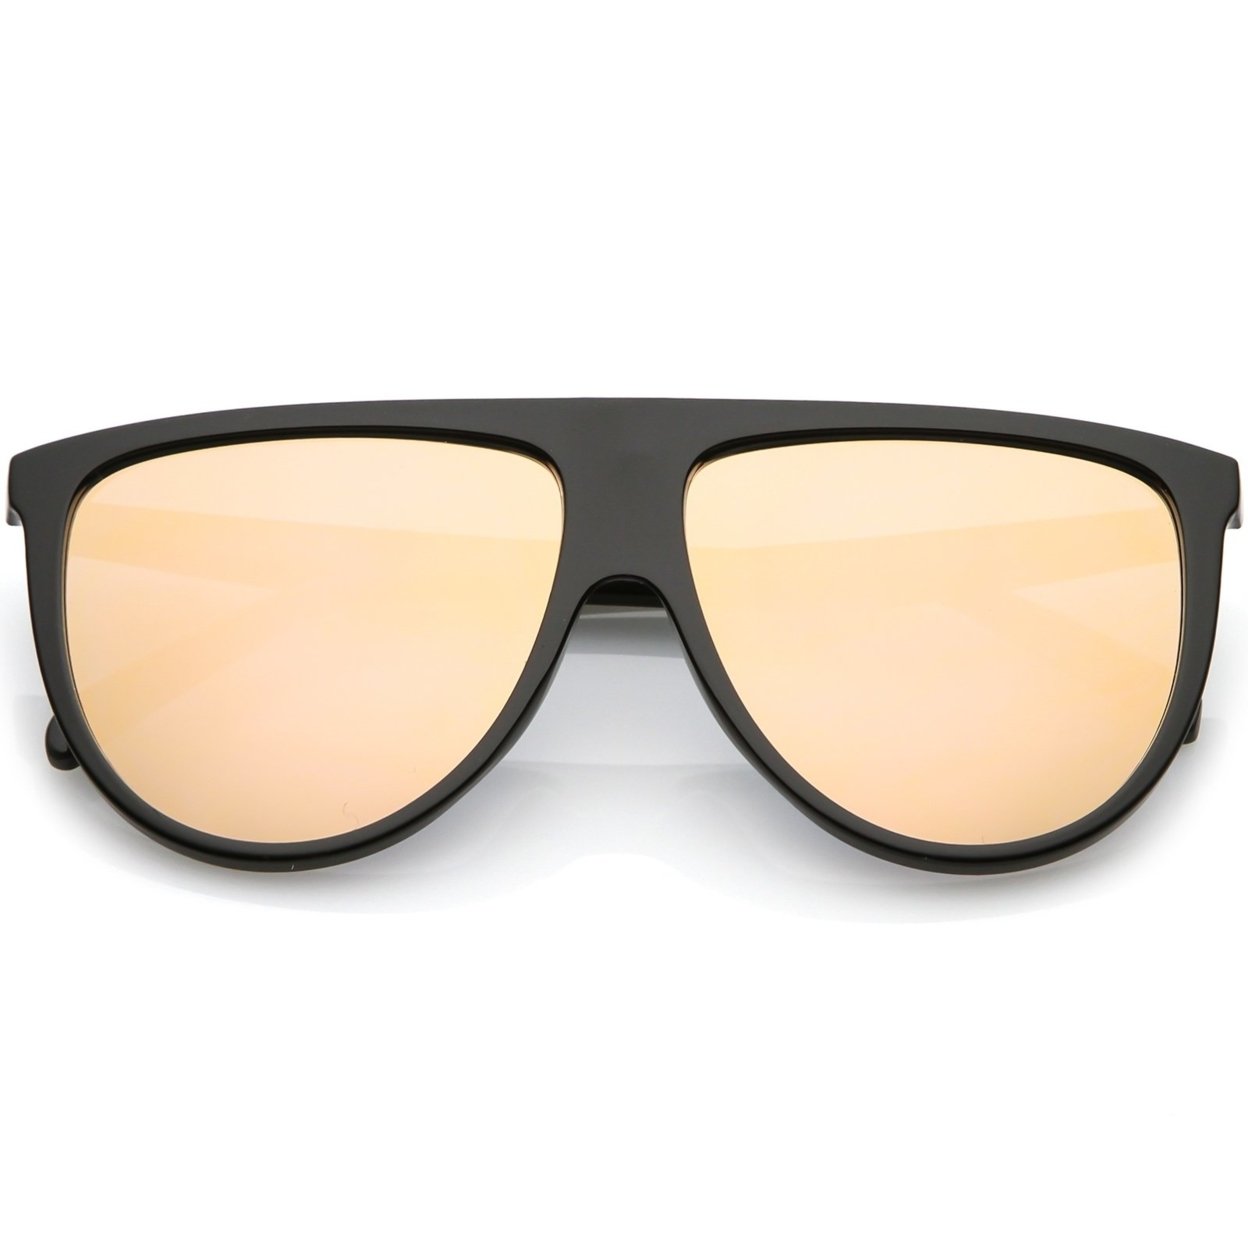 Oversize Modern Aviator Sunglasses Flat Top Color Mirrored Lens 59mm - Tortoise / Magenta Mirror